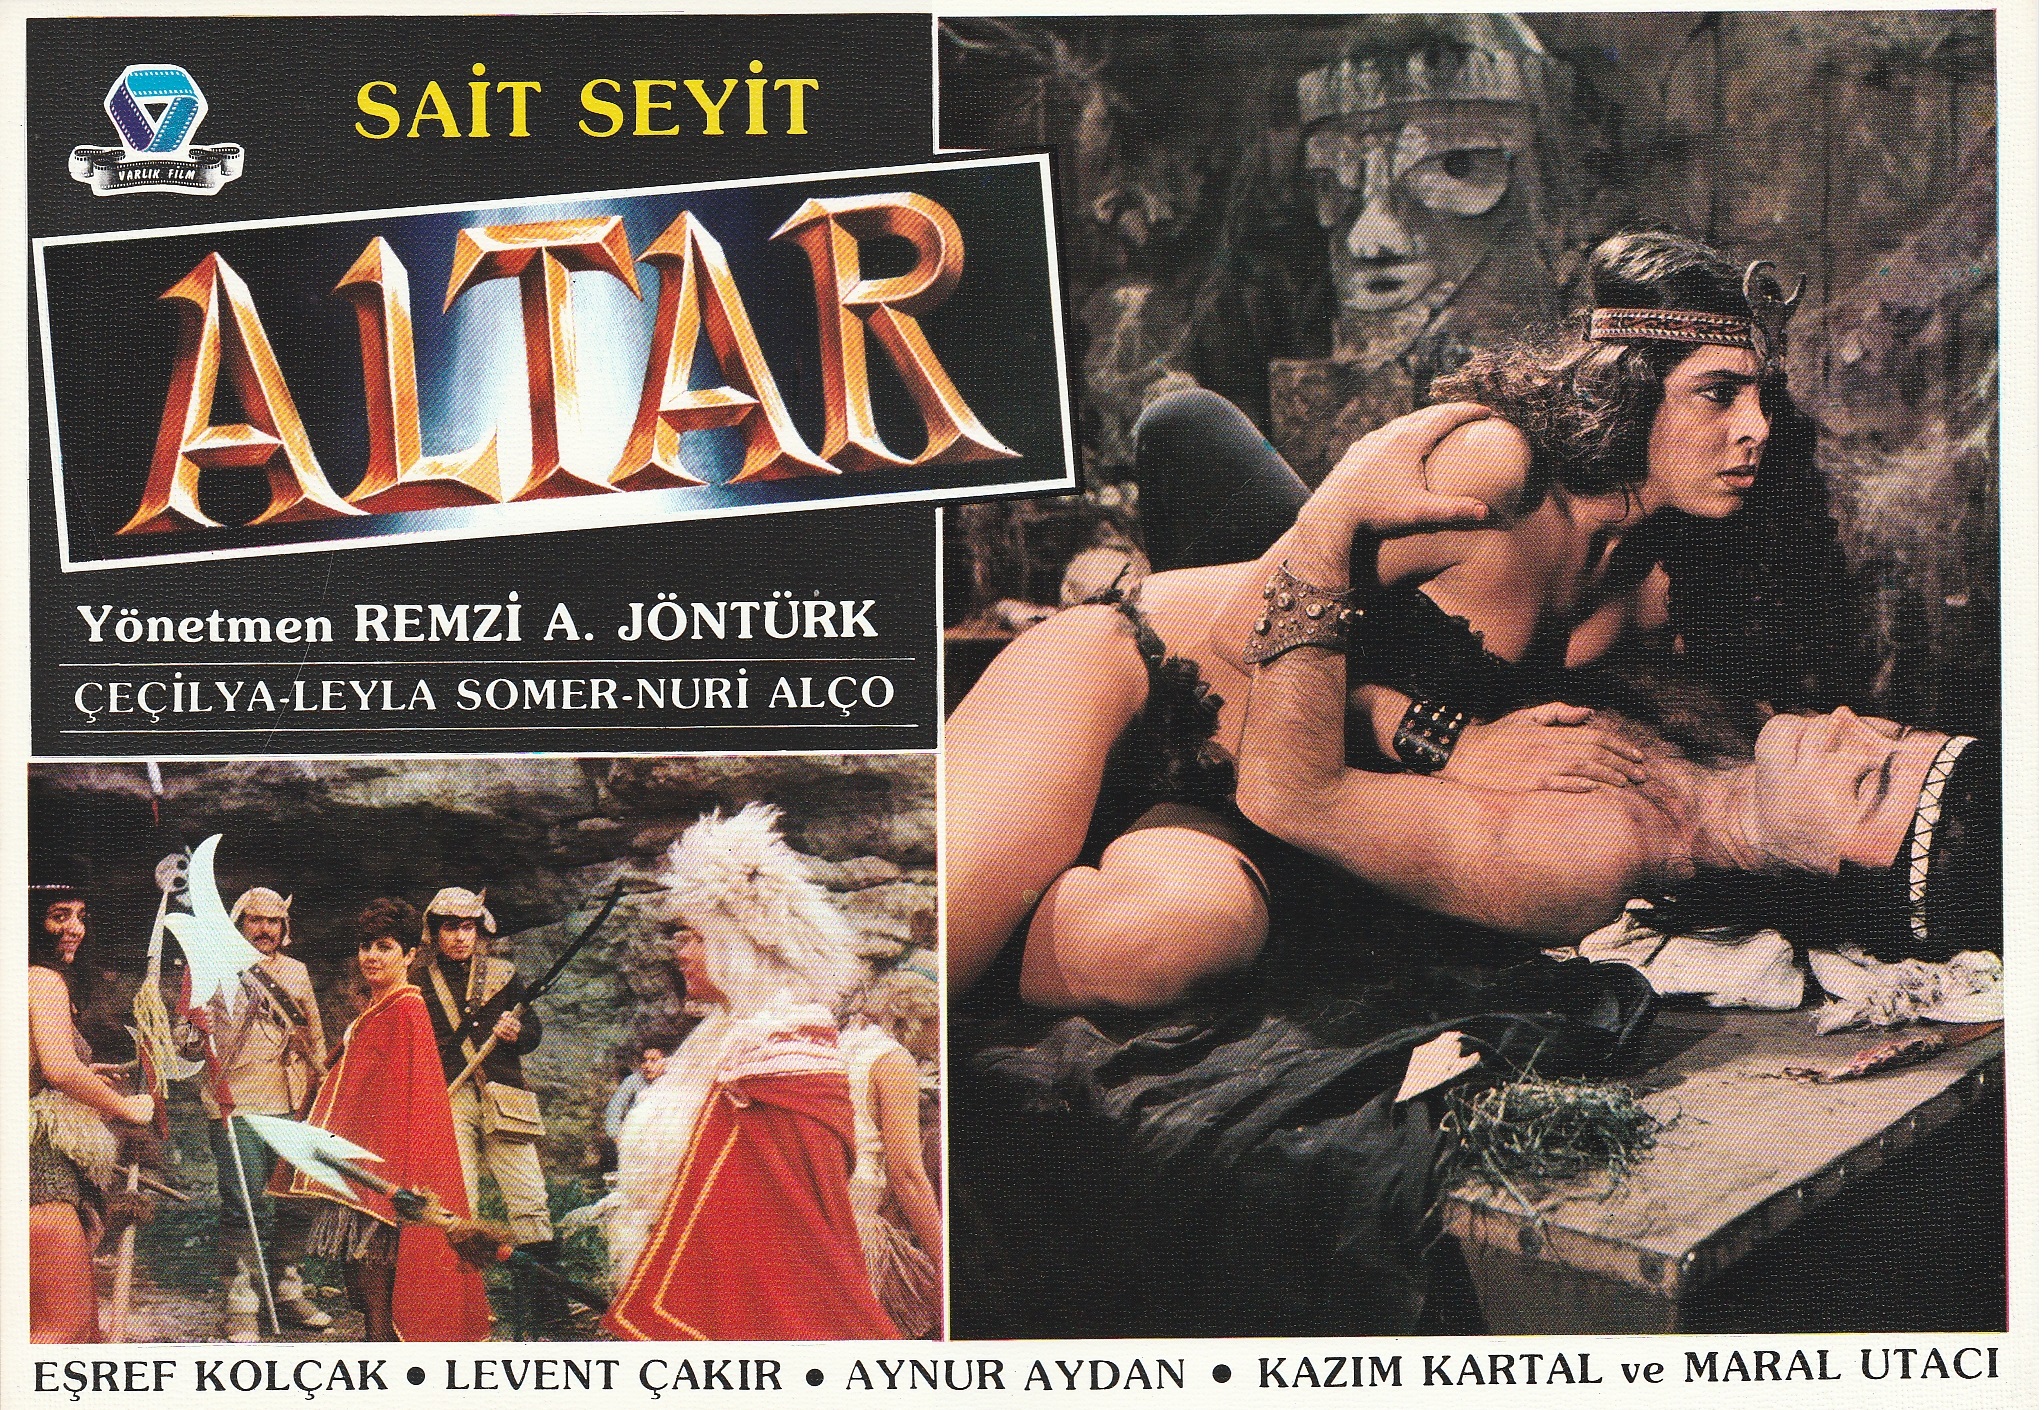 Altar (1985) Screenshot 4 